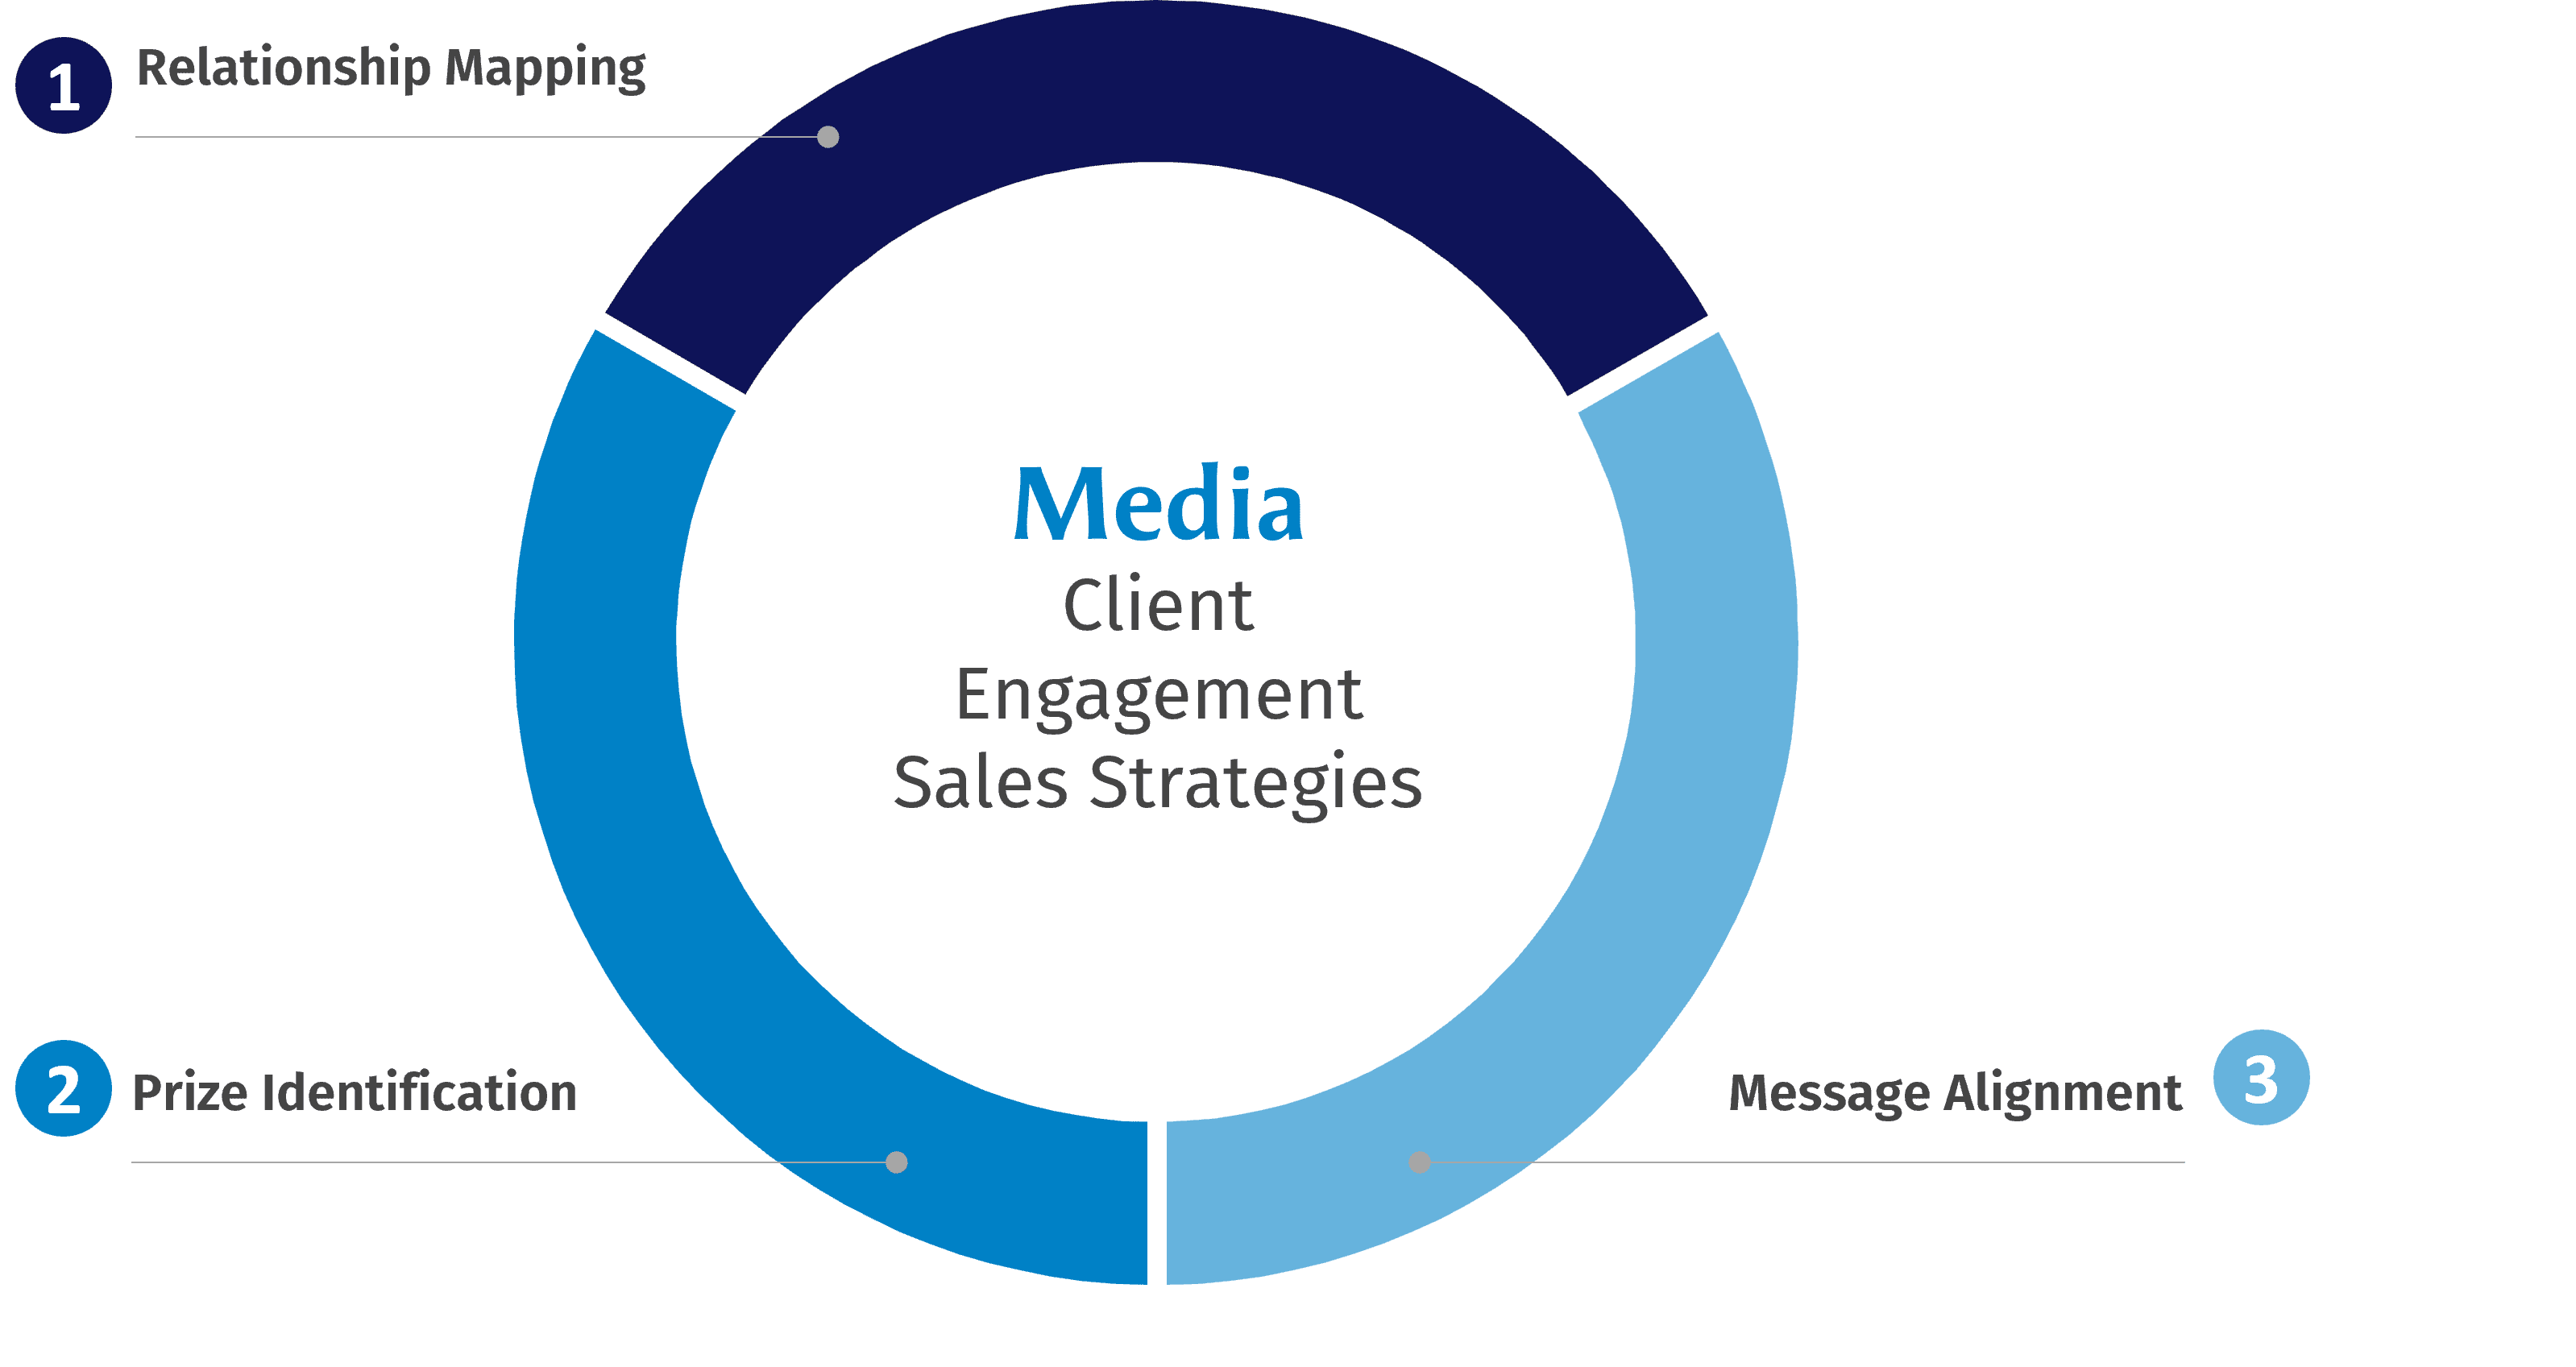 Media: Client Engagement Strategies